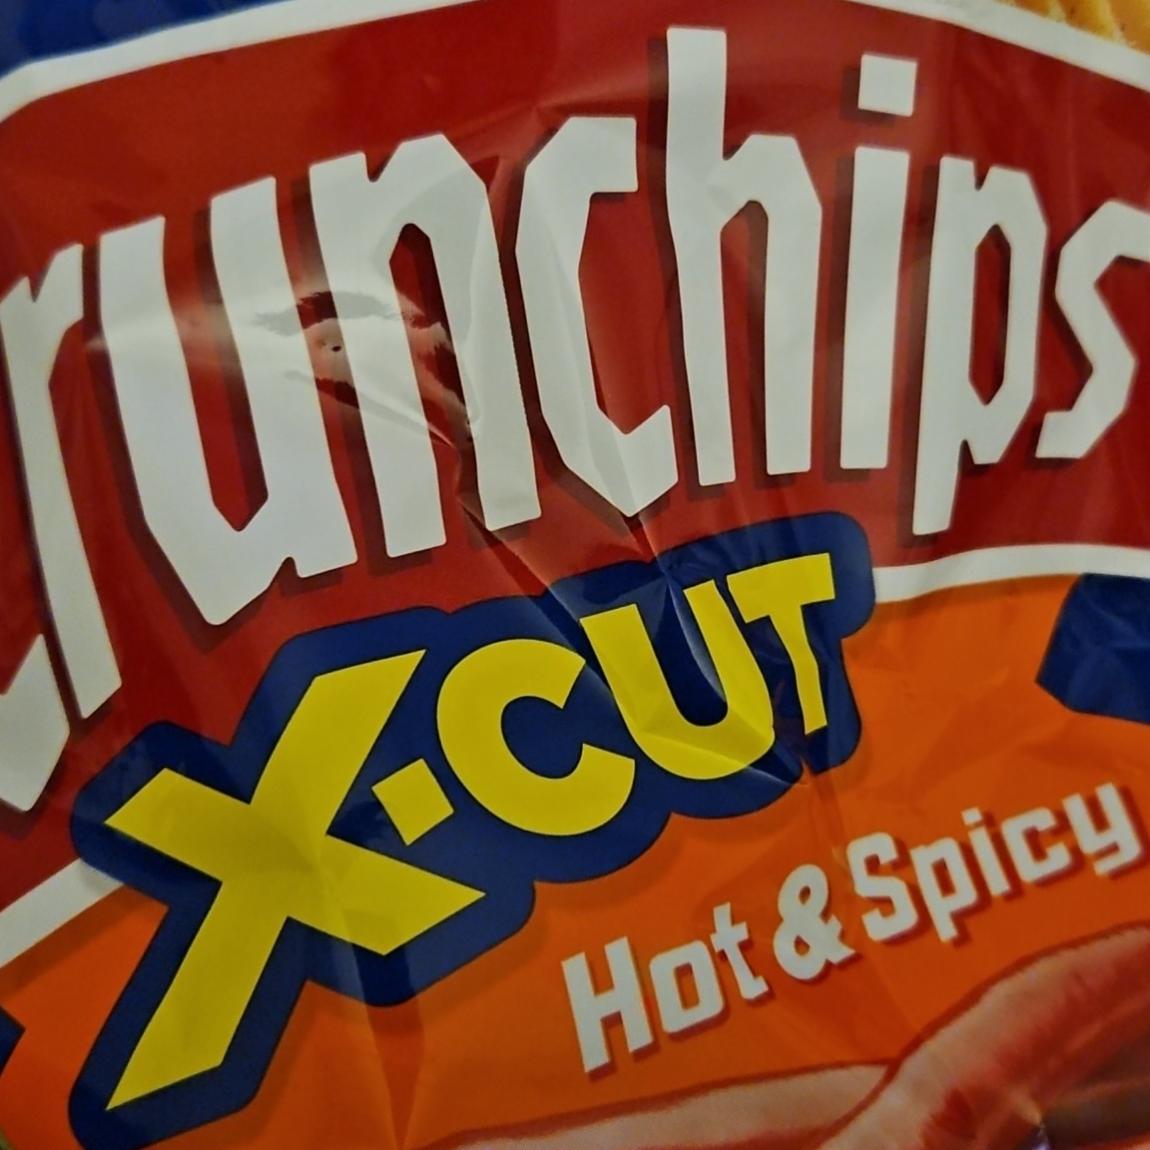 Photo - Crunchips X-Cut Hot & Spicy Crinkle Cut Potato Crisps 140 g